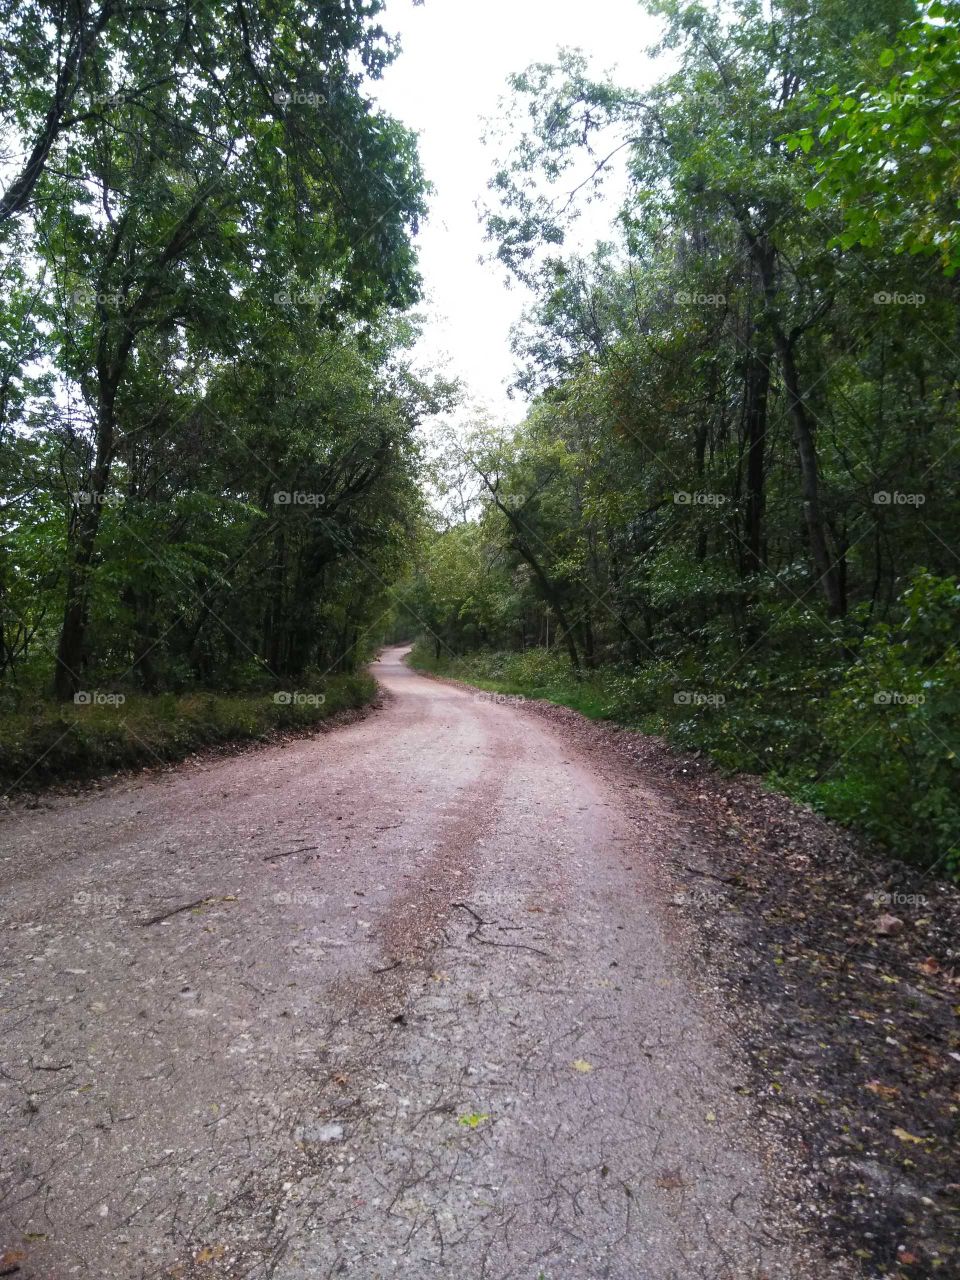 Oklahoma back roads